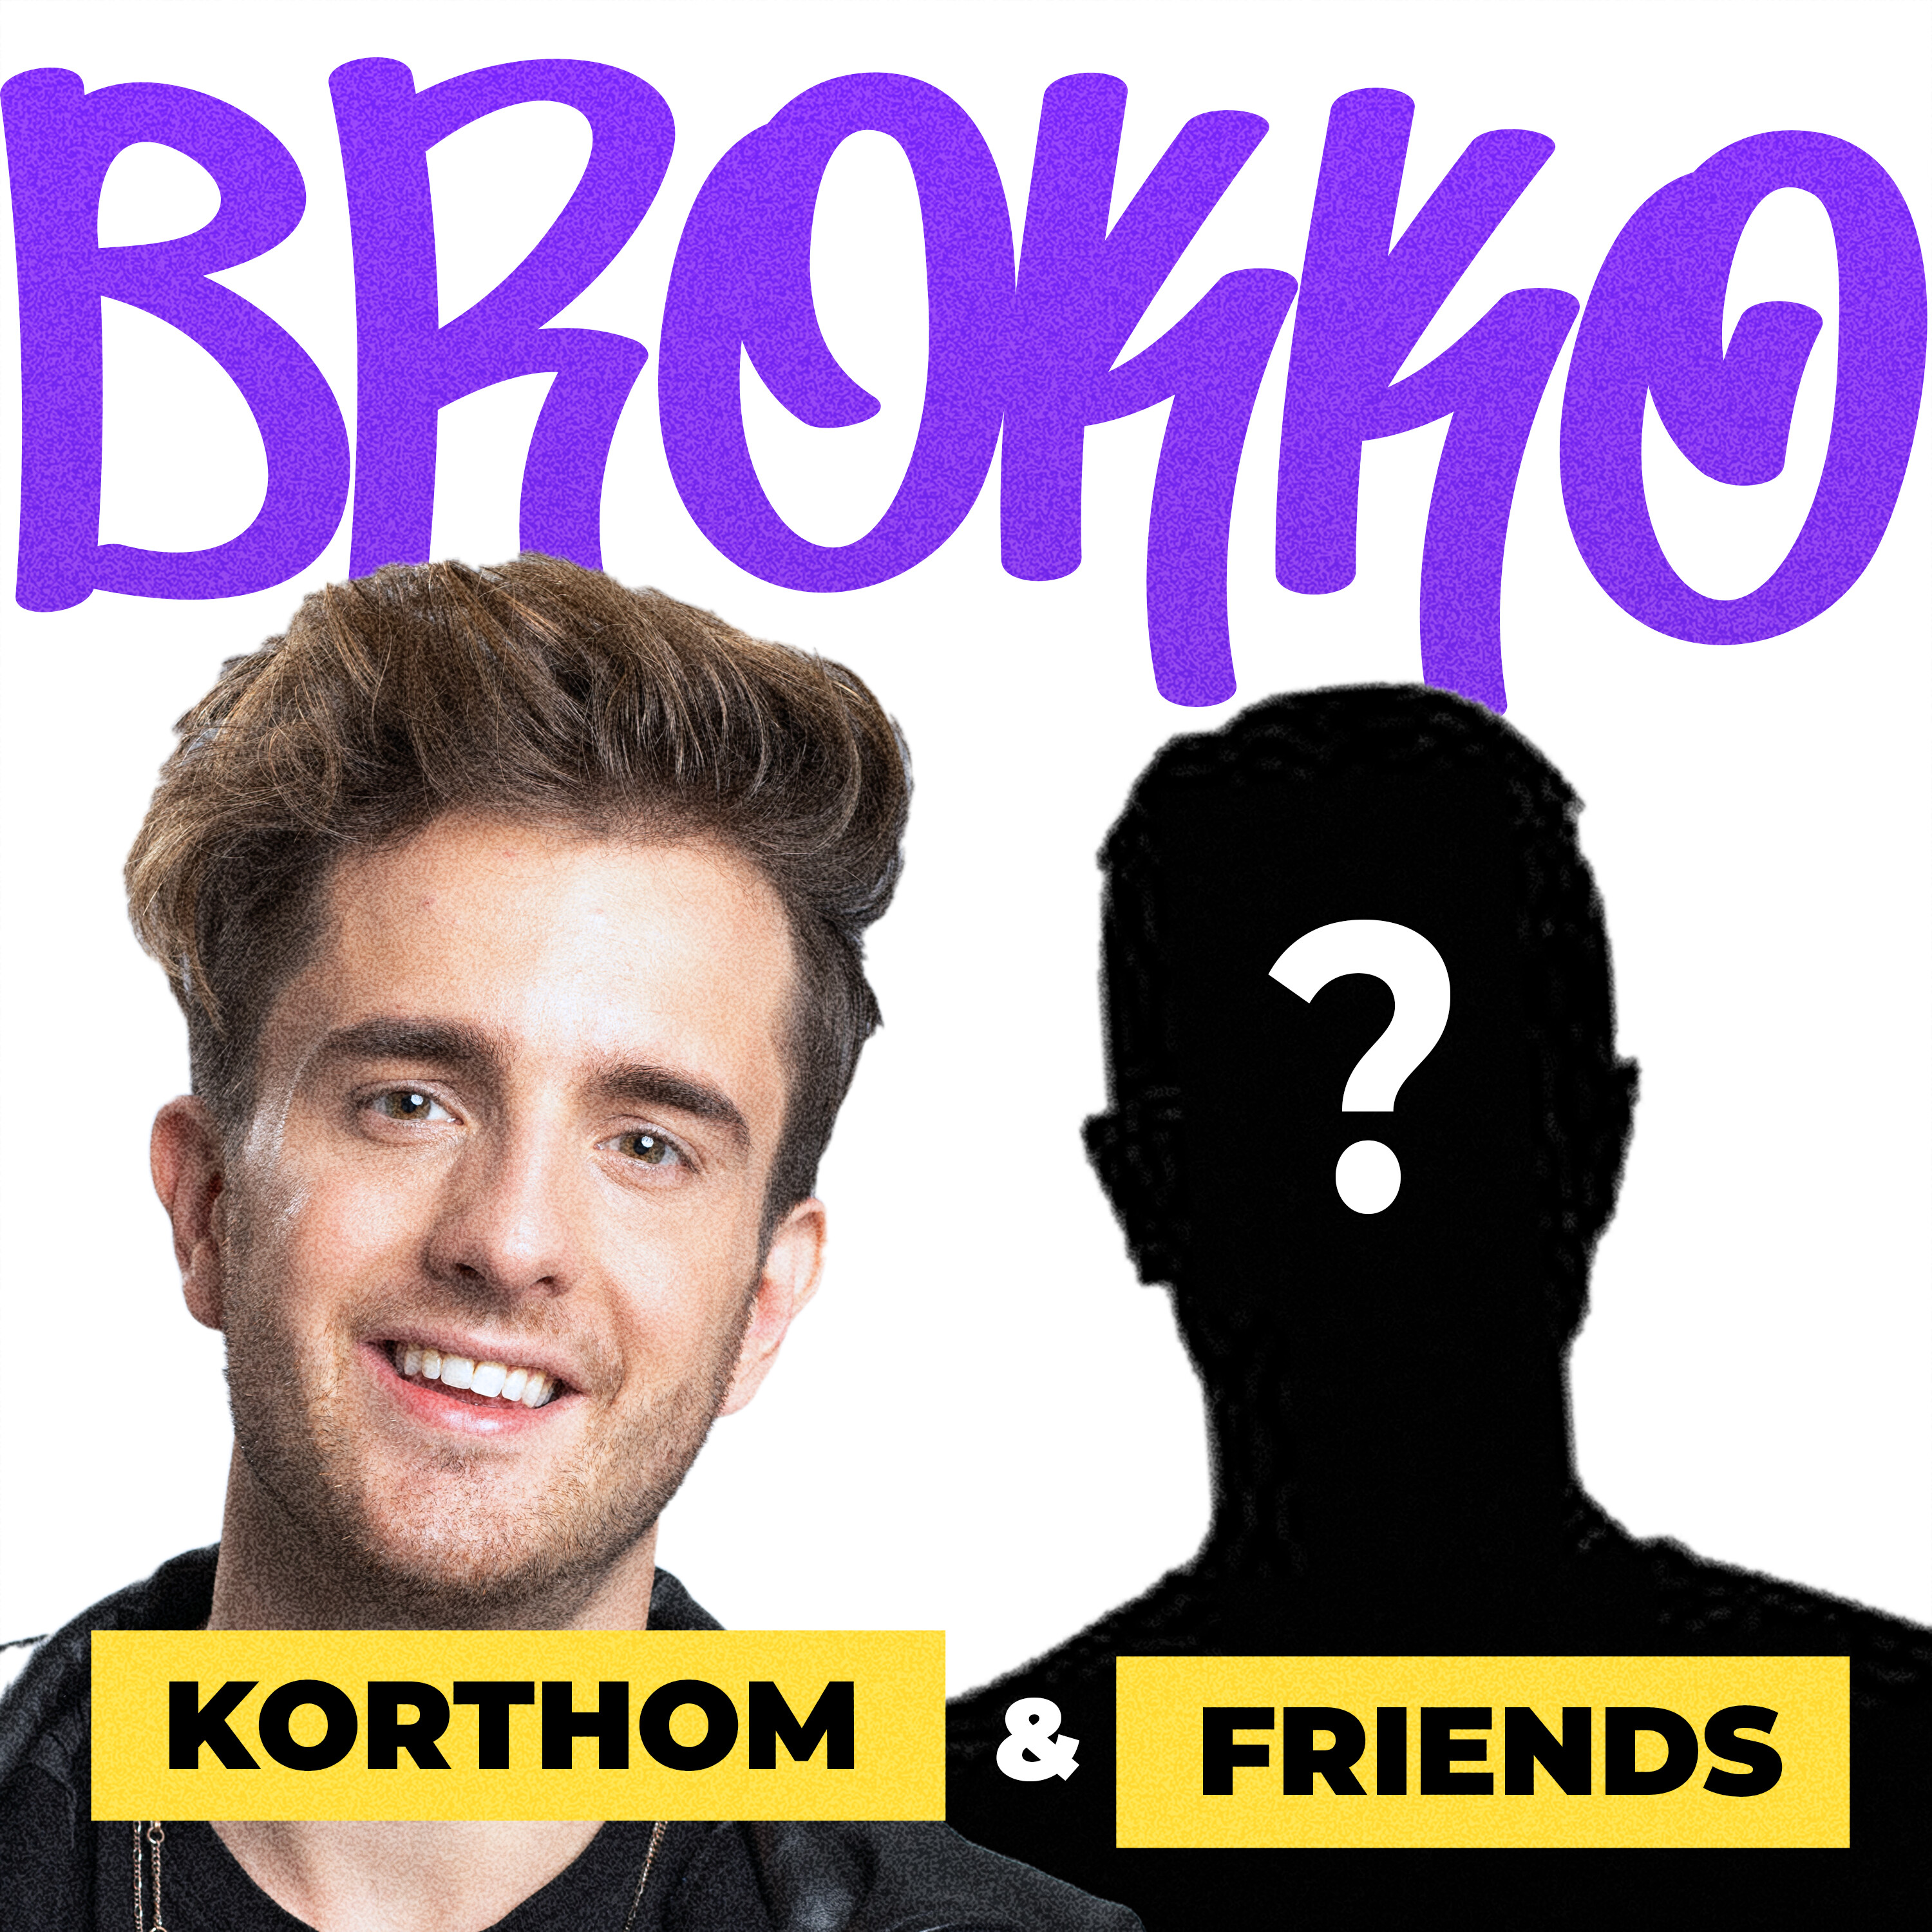 Logo Brokko met Korthom & Friends